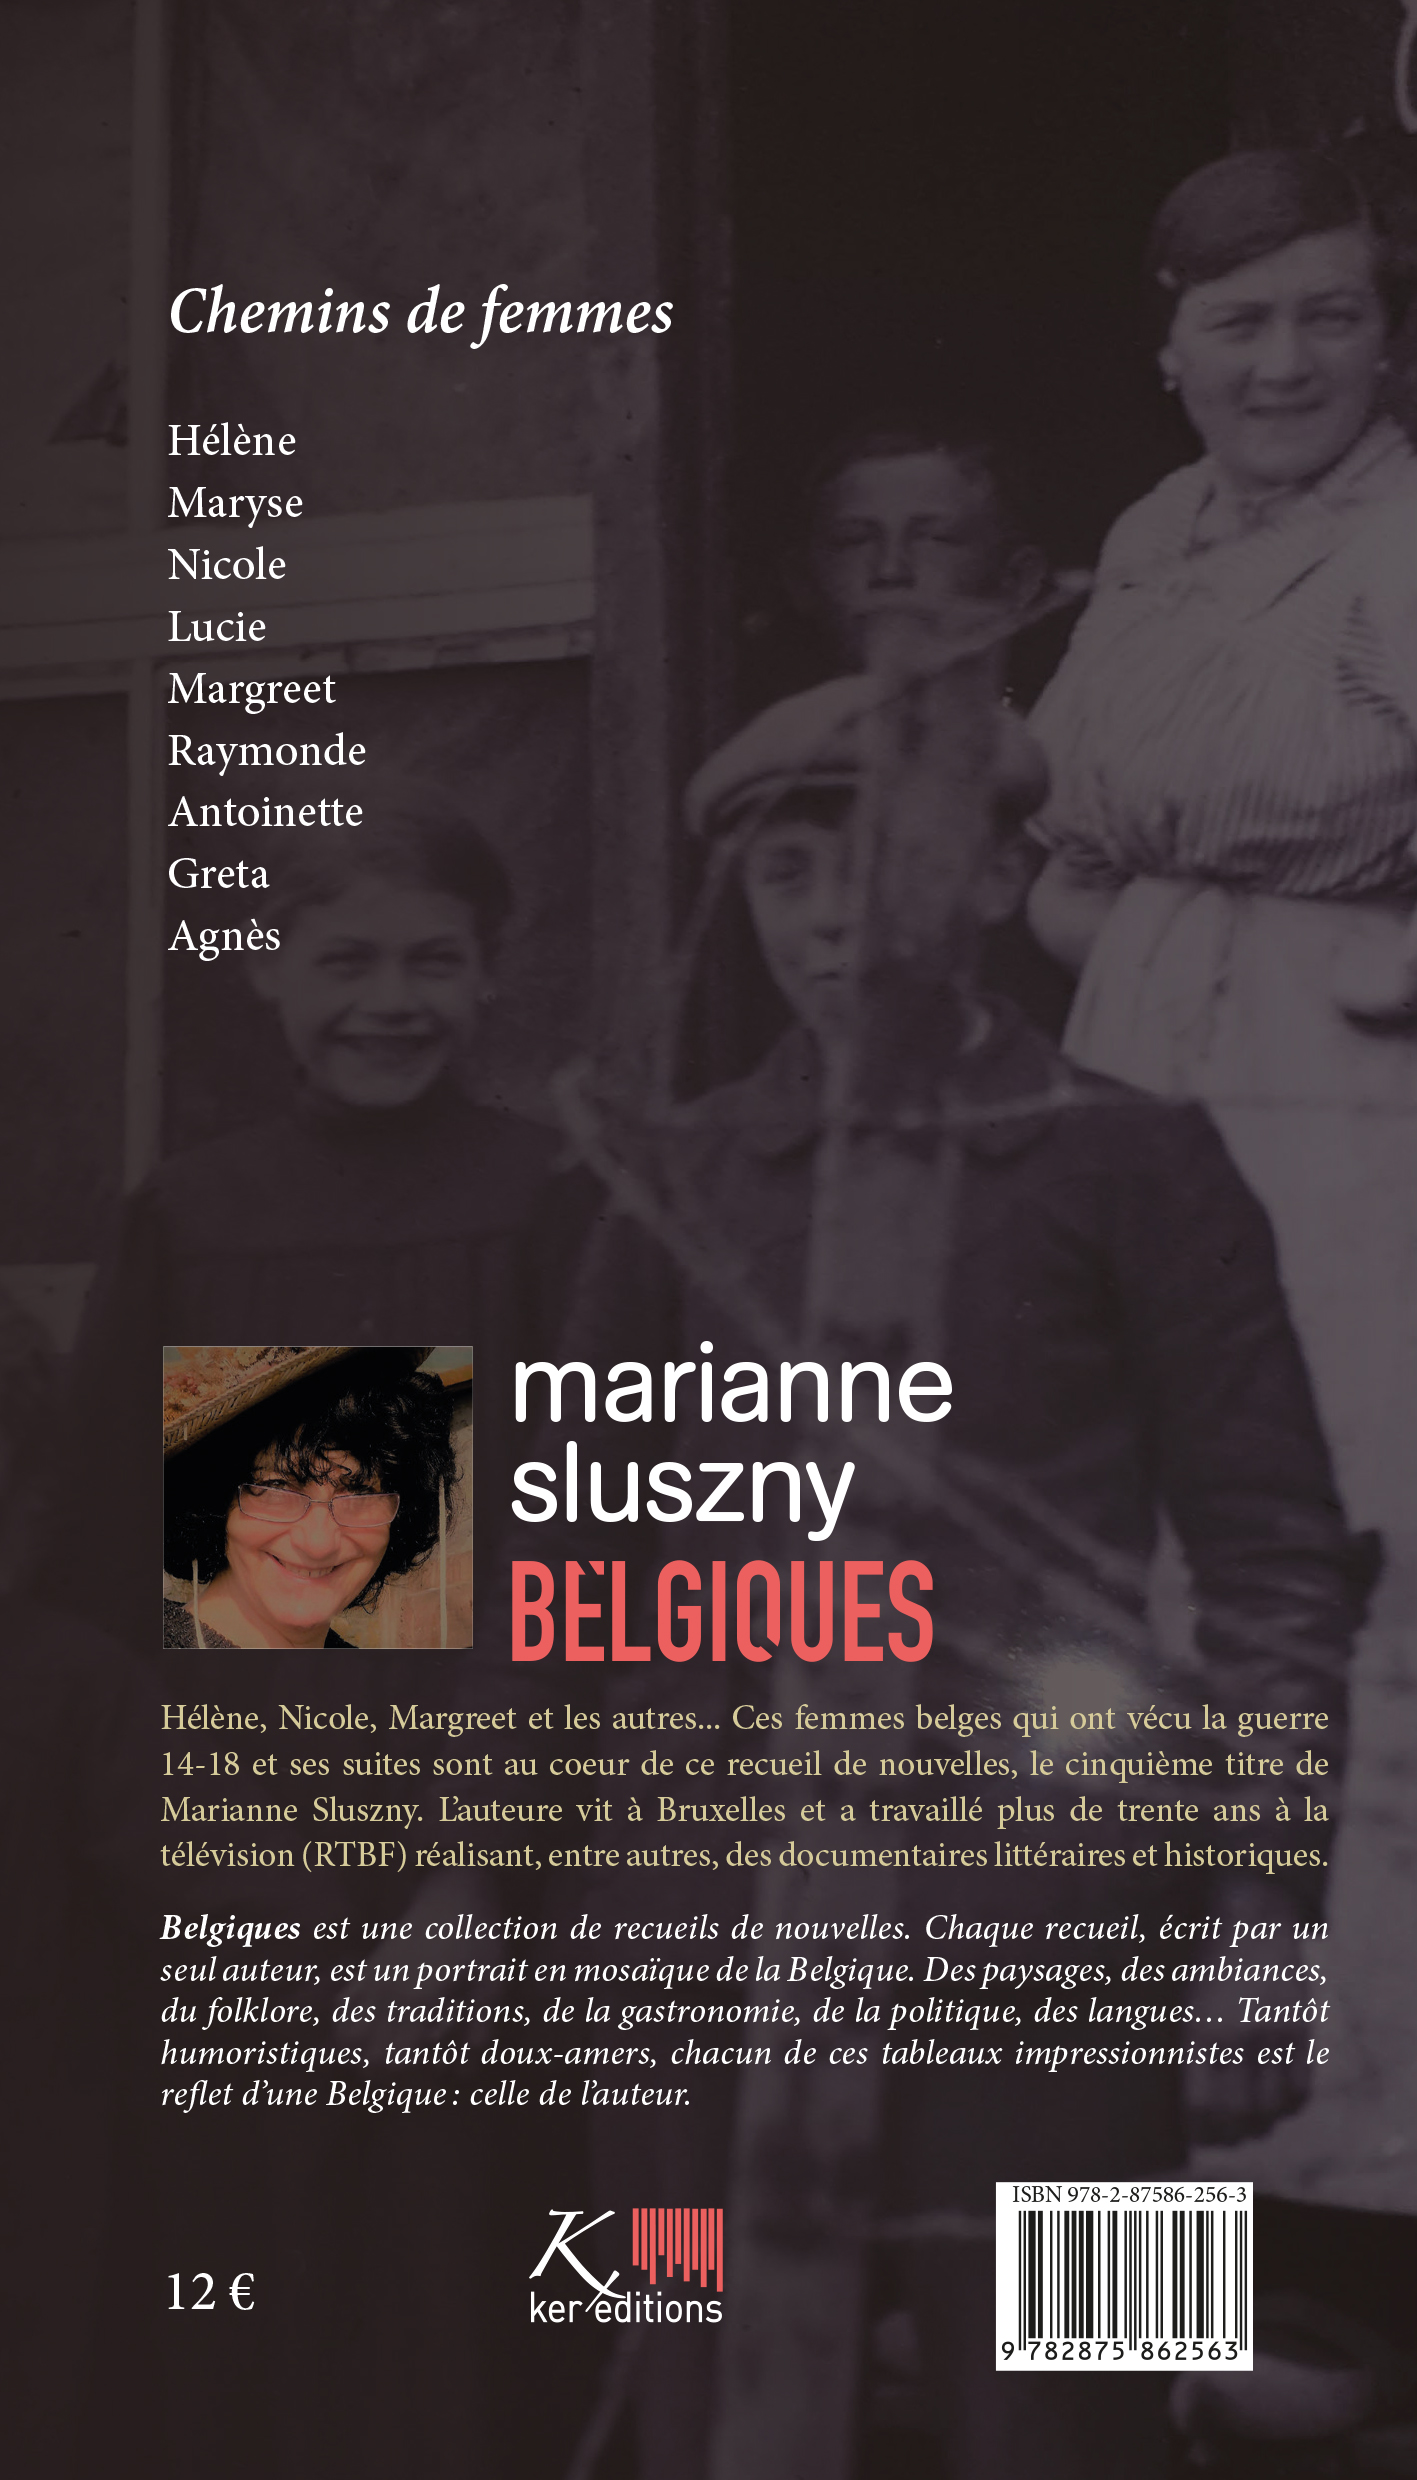 Marianne Sluszny – Chemins de femmes